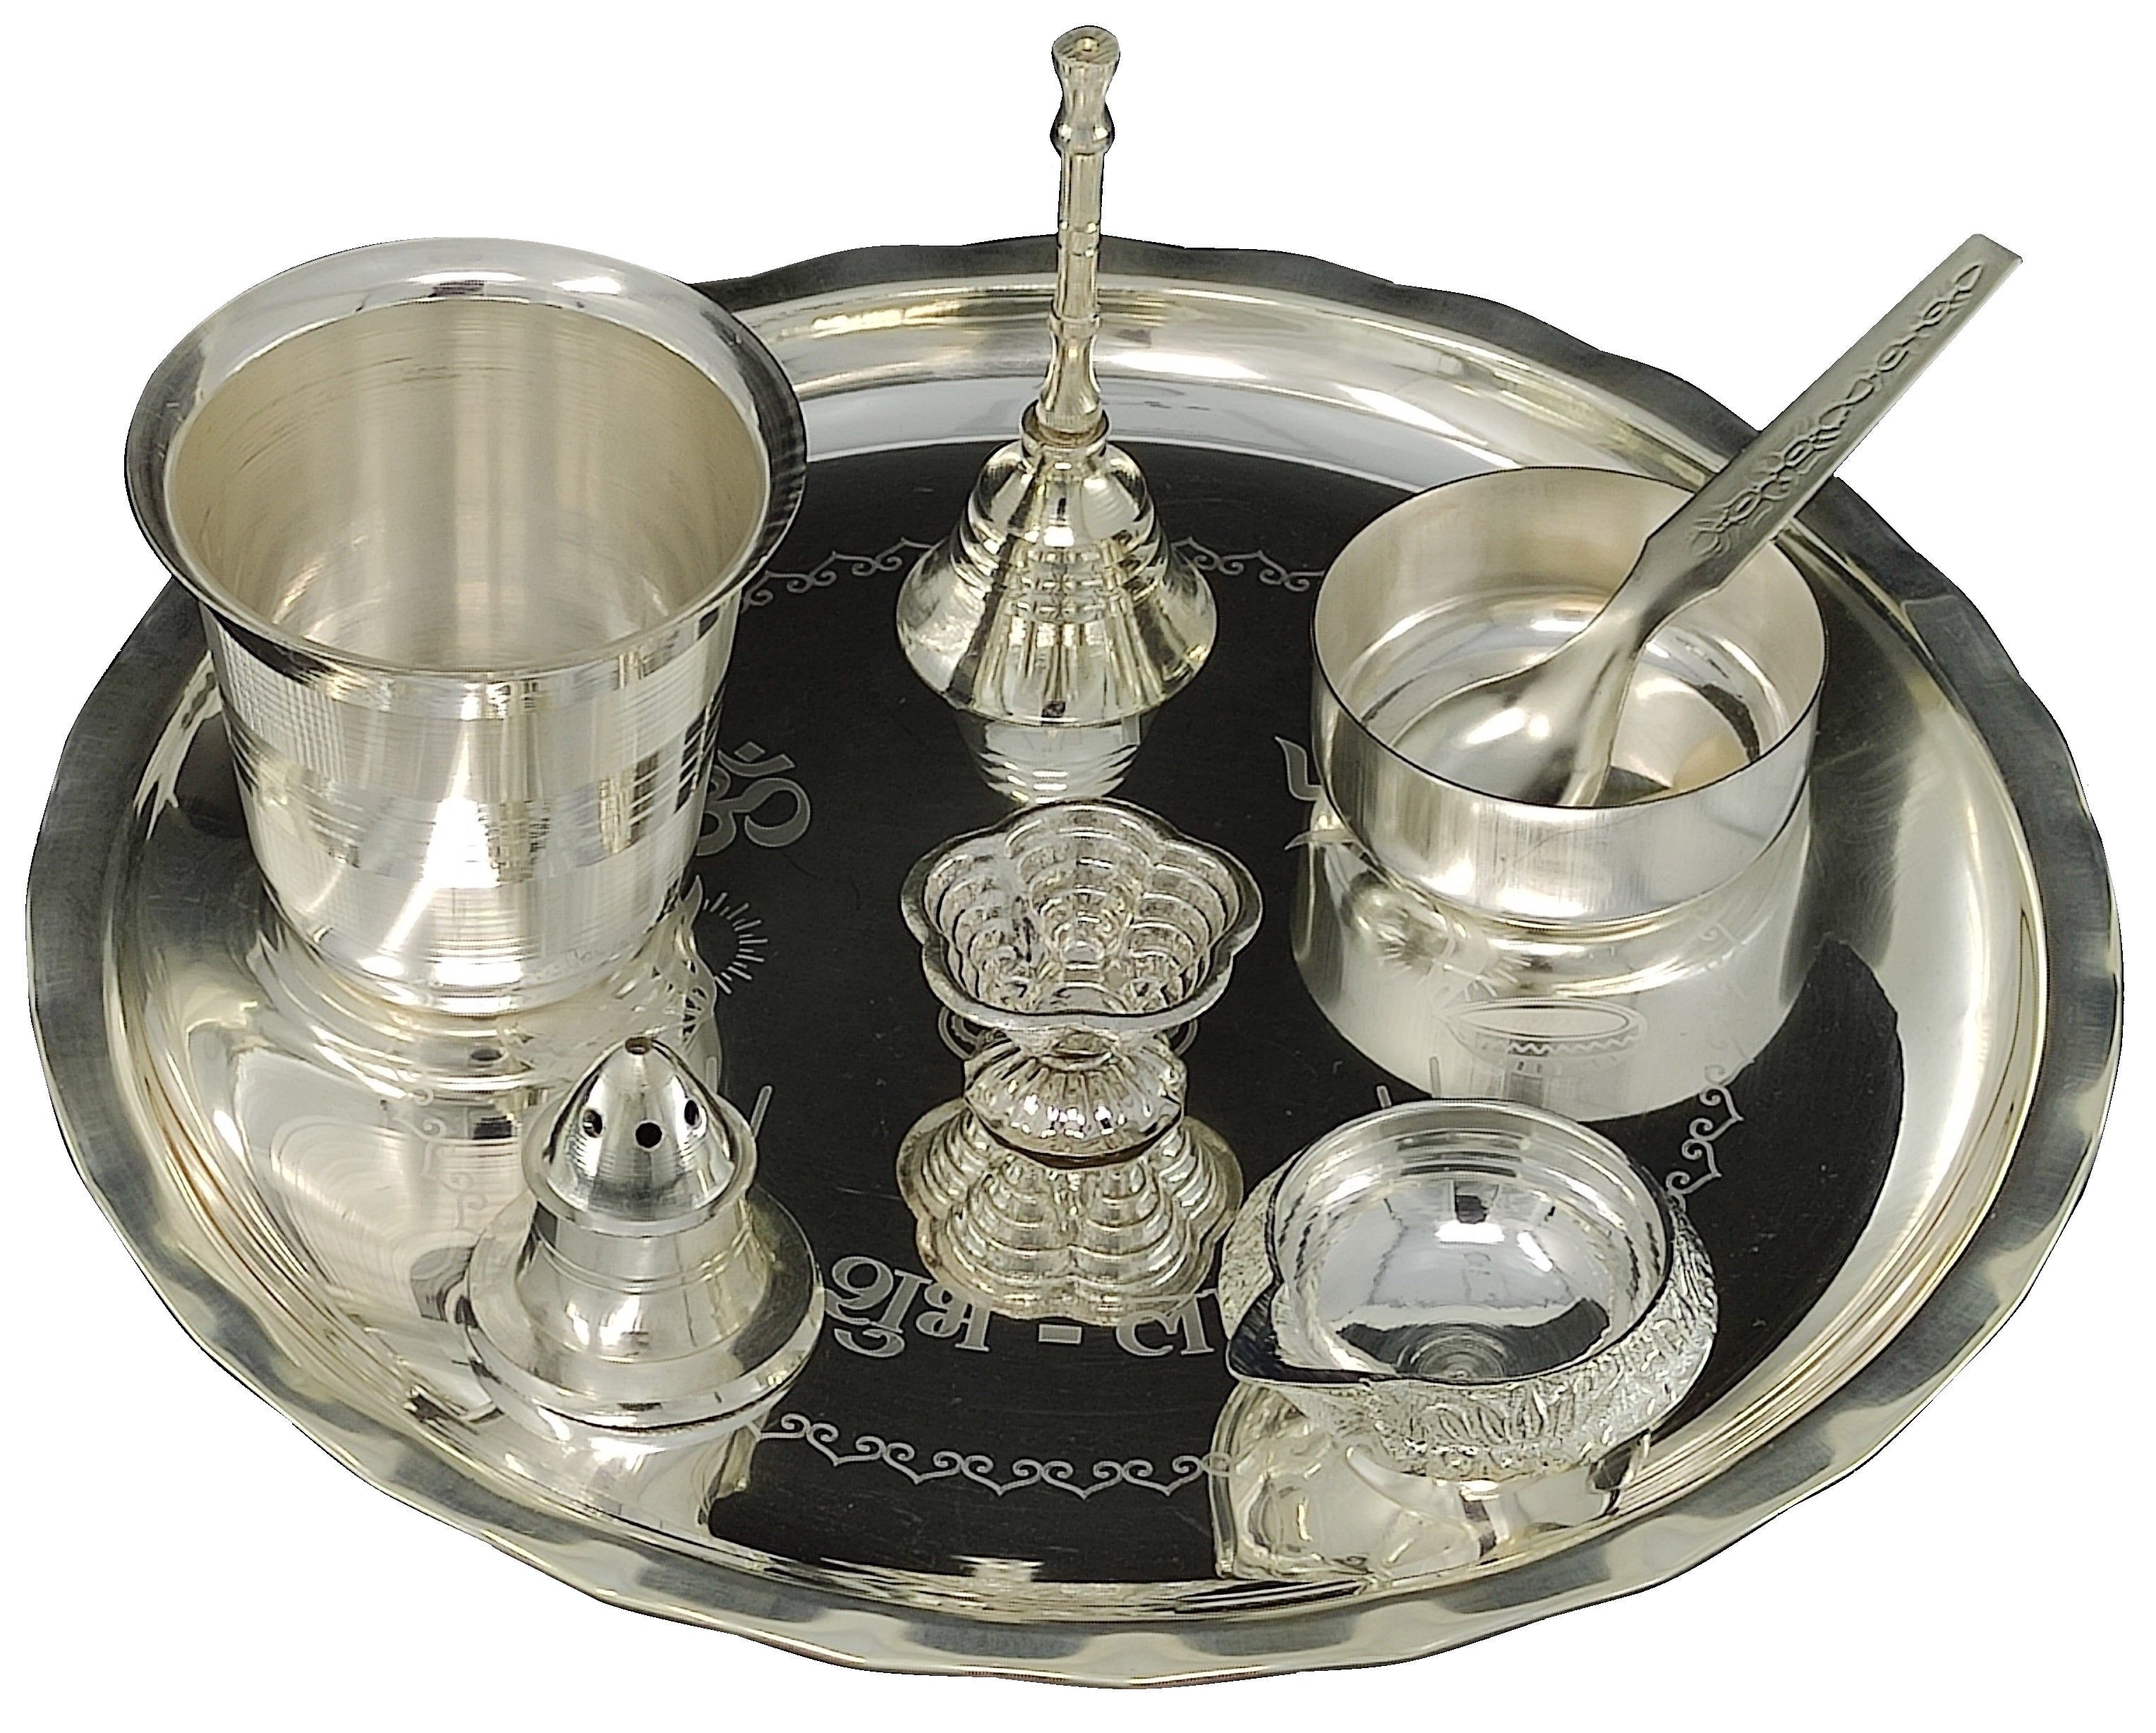 BENGALEN Silver Plated Pooja thali Set 8 Inch with Plate Ghanti Bowl Spoon Dhup Dan Kuber Diya Kumkum Stand Puja Thali for Diwali Home Mandir Office Wedding Return Gift Items